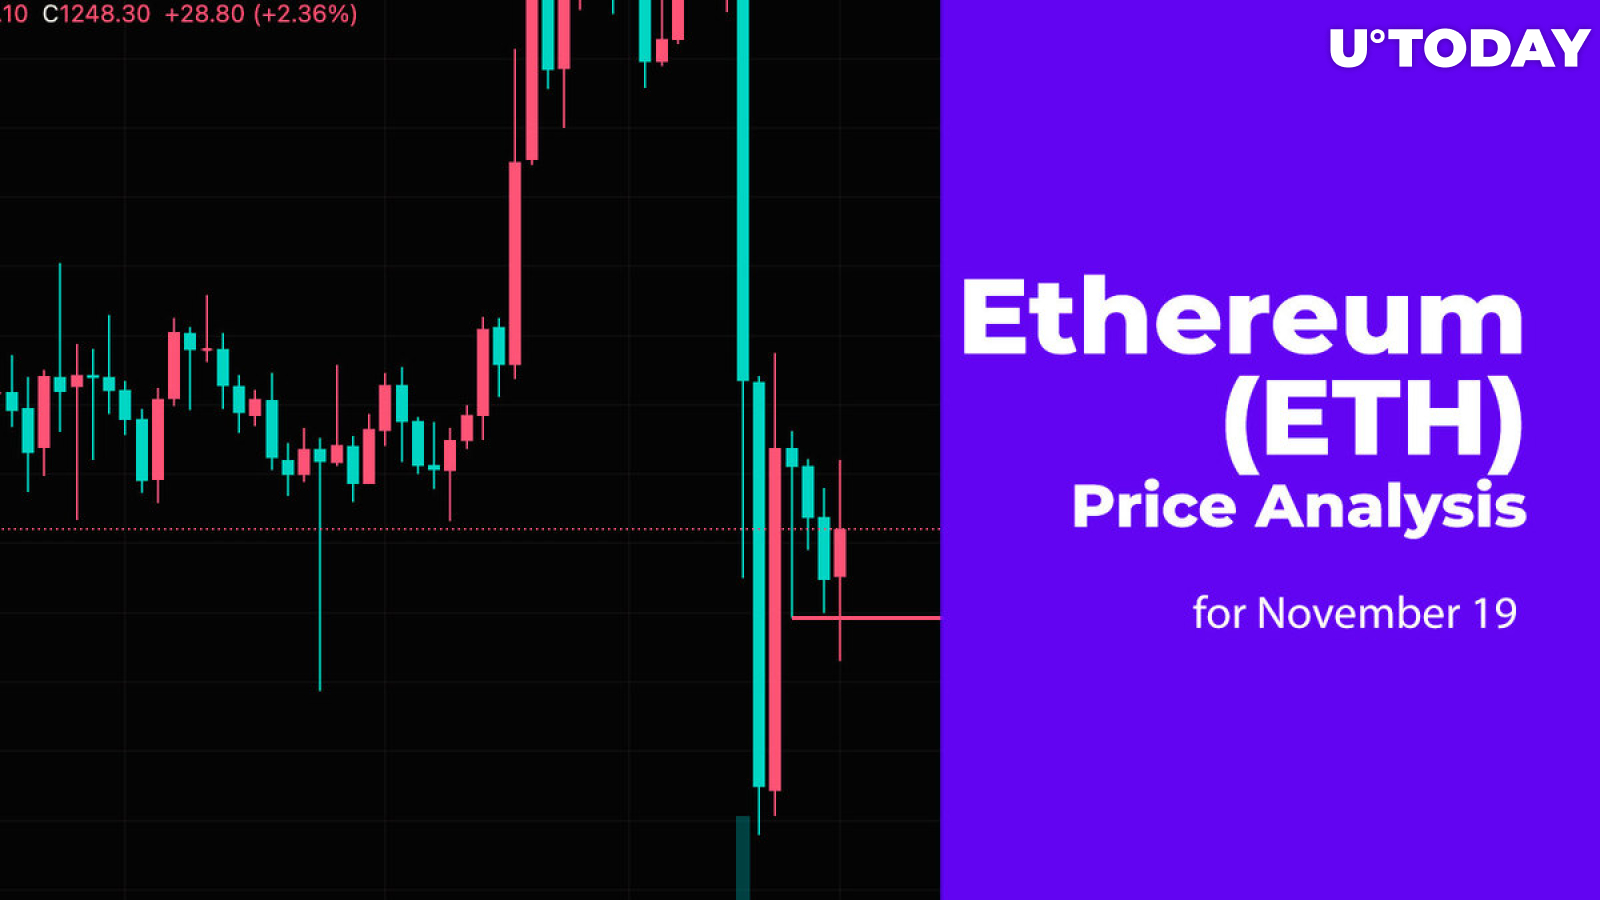 Ethereum (ETH) Price Analysis for November 19